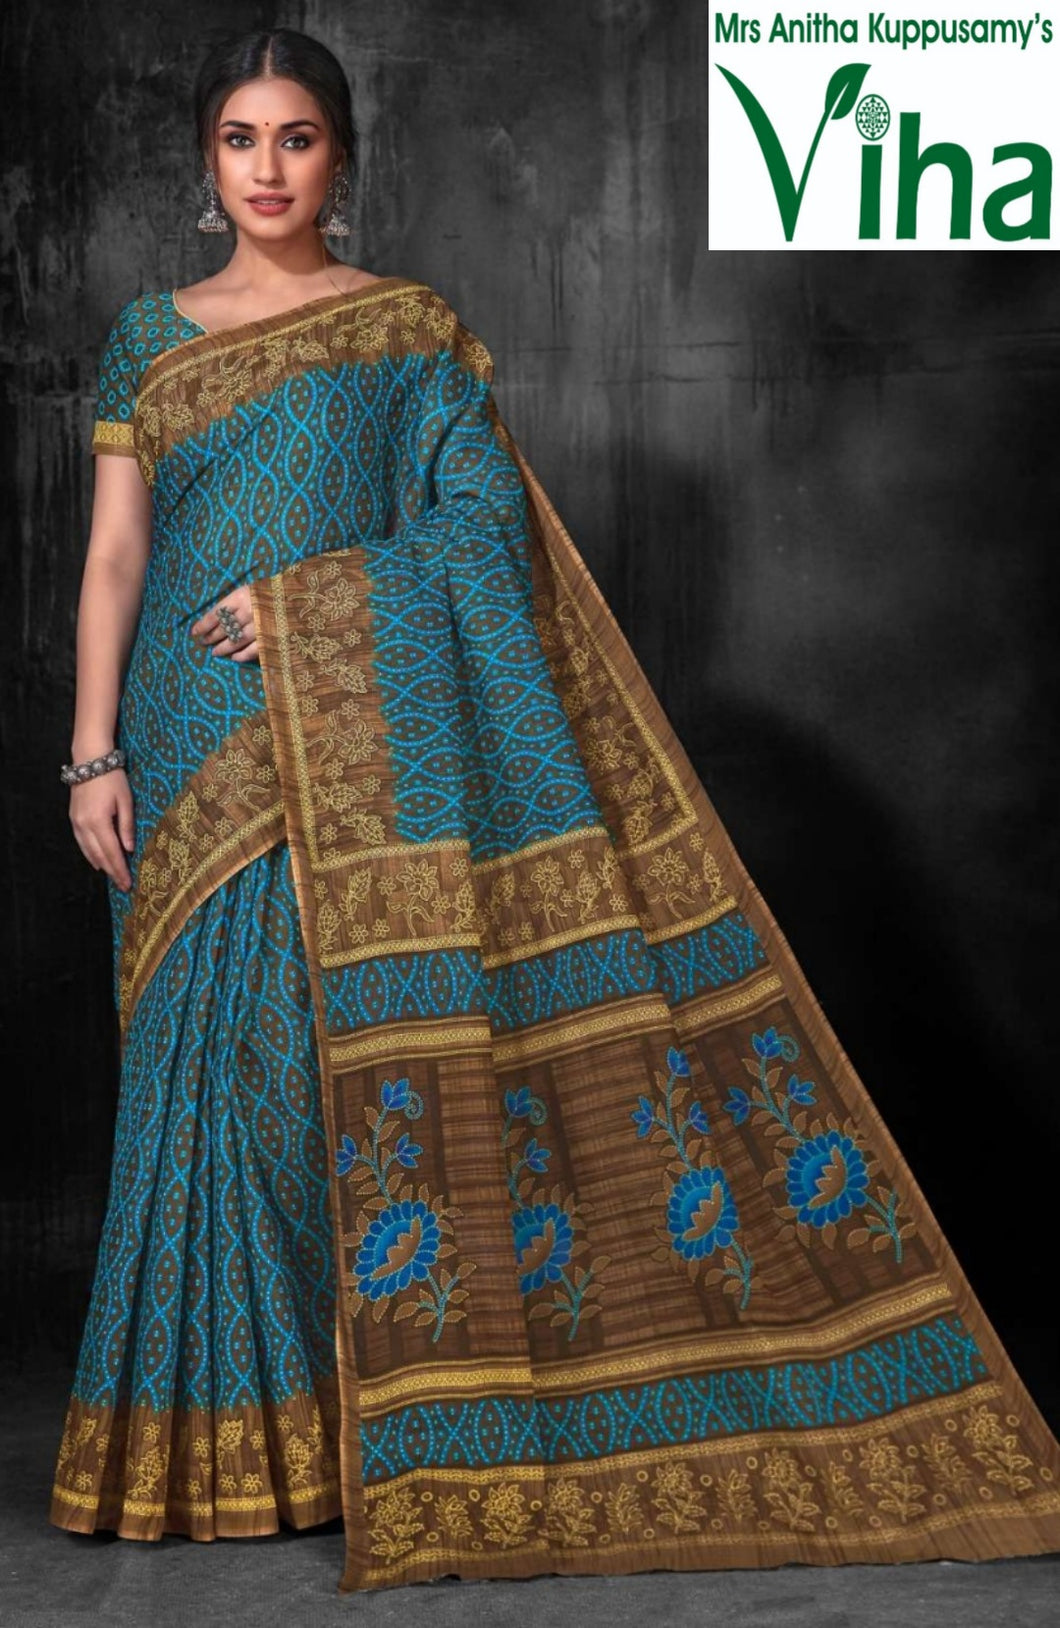 New Saree Collections at www.viha.online/Anitha Kuppusamy - YouTube